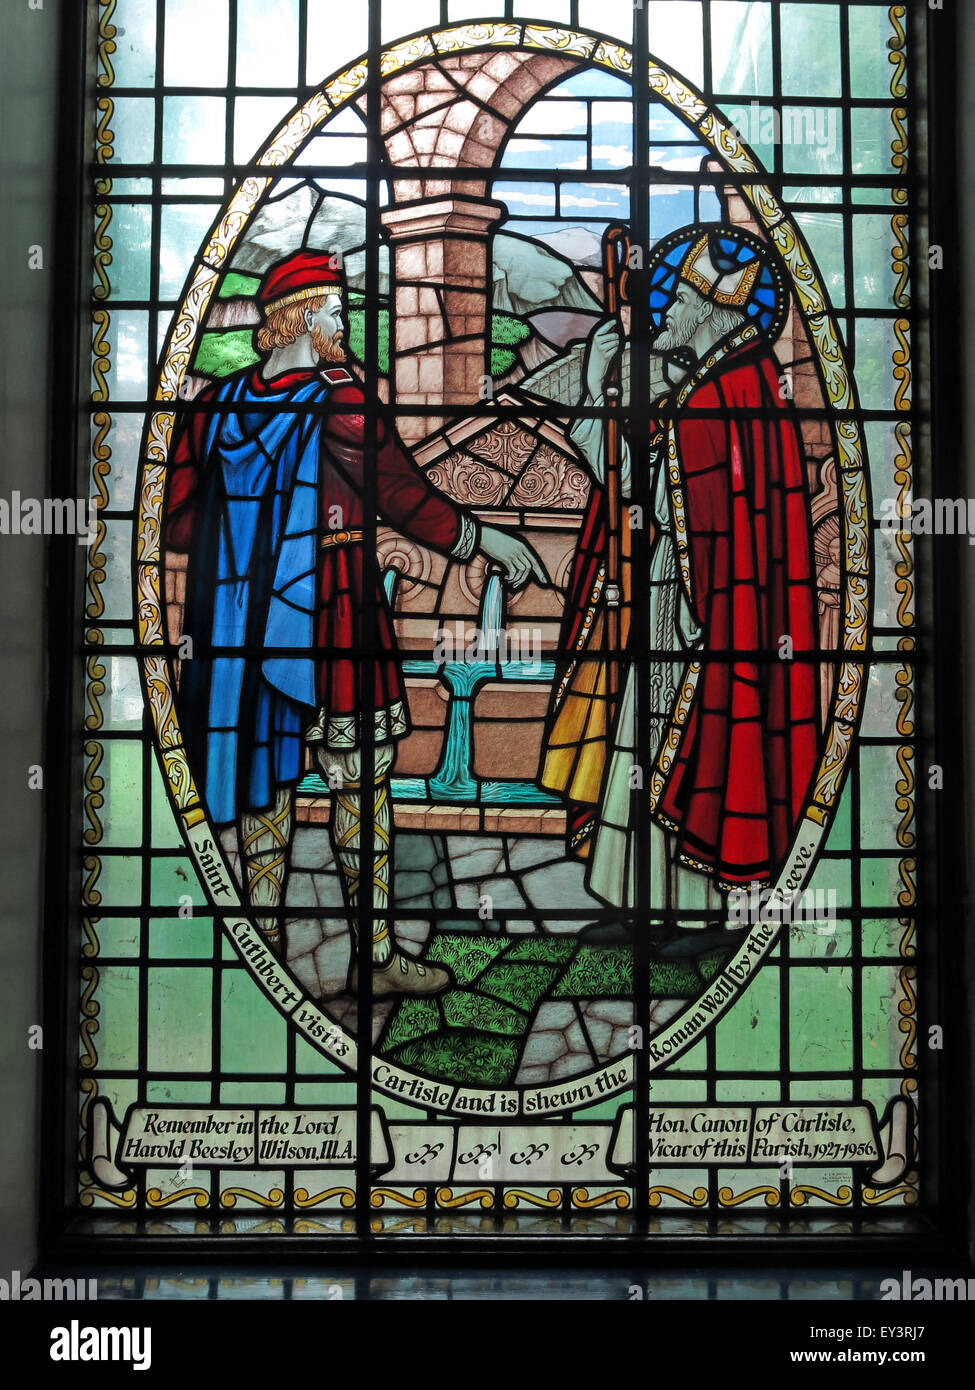 St Cuthberts Church,Carlisle,Cumbria,England,UK interior - Saint Cuthbert Window Stock Photo